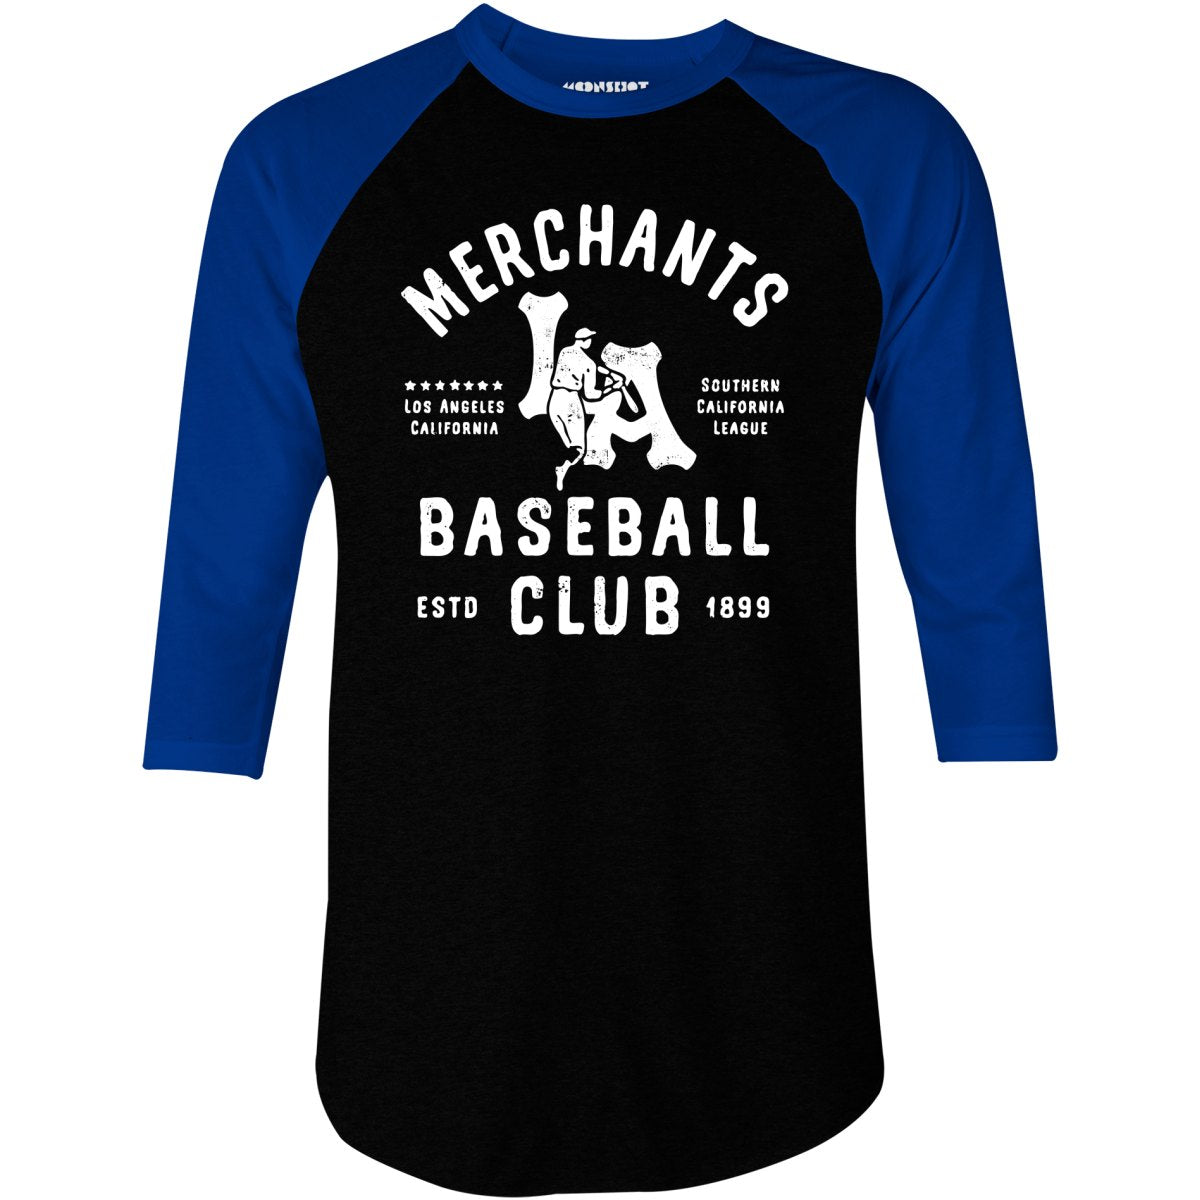 Los Angeles Merchants - California - Vintage Defunct Baseball Teams - 3/4 Sleeve Raglan T-Shirt